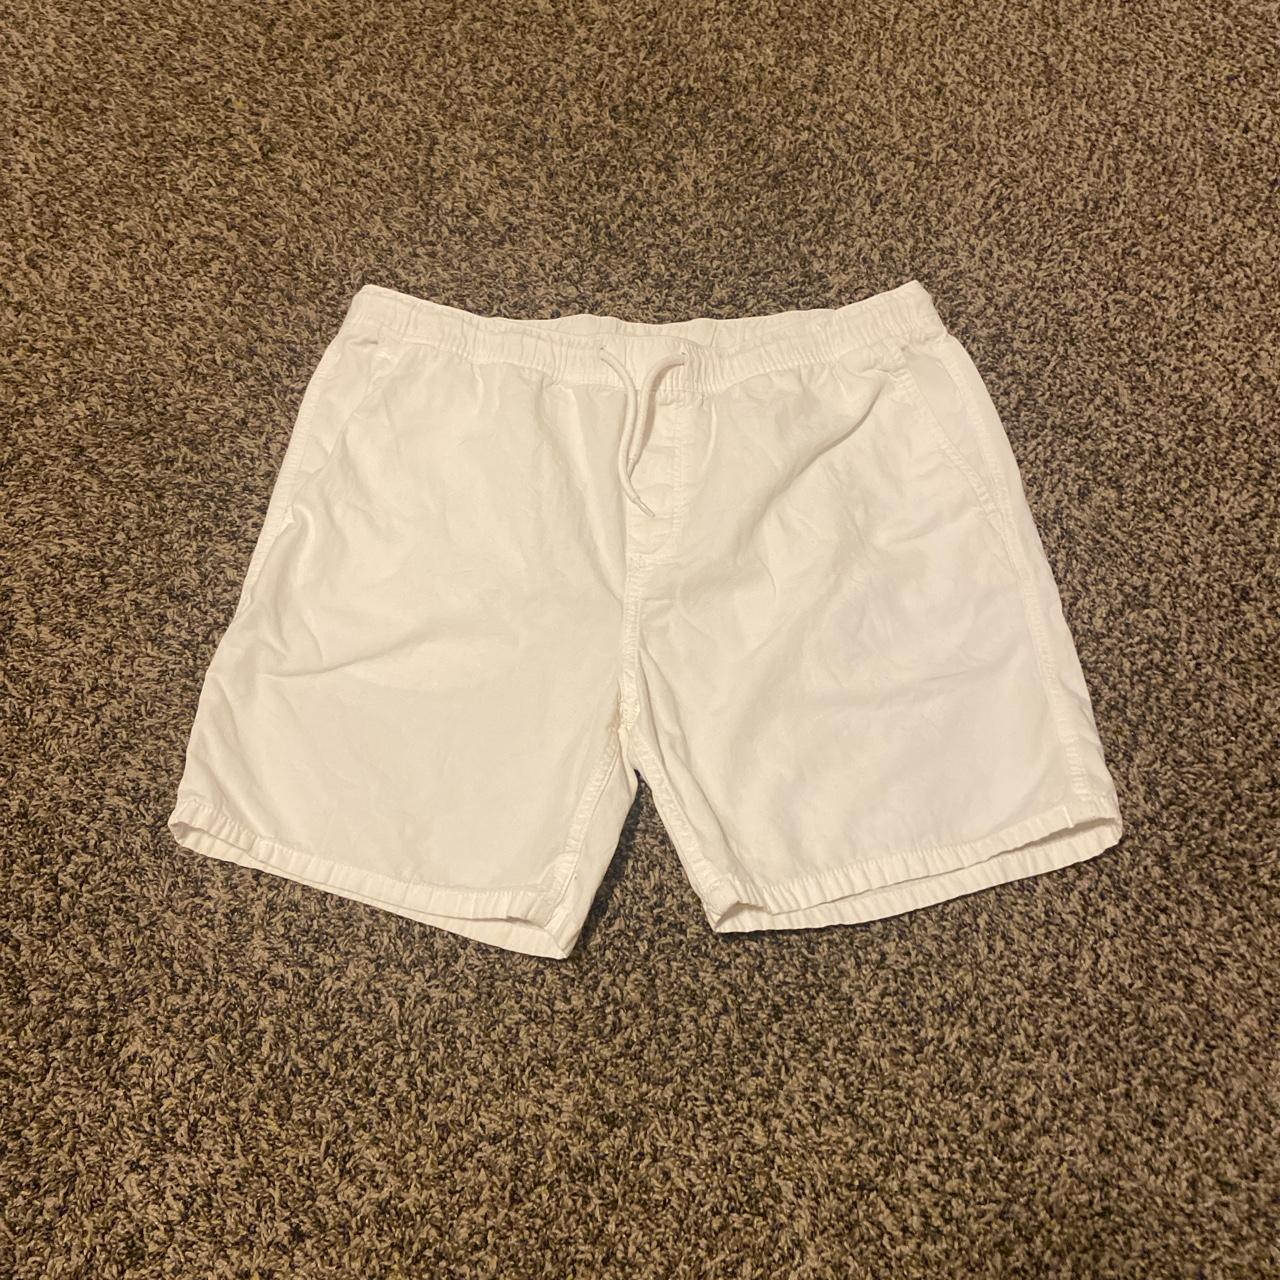 large regular fit h&m white shorts - Depop